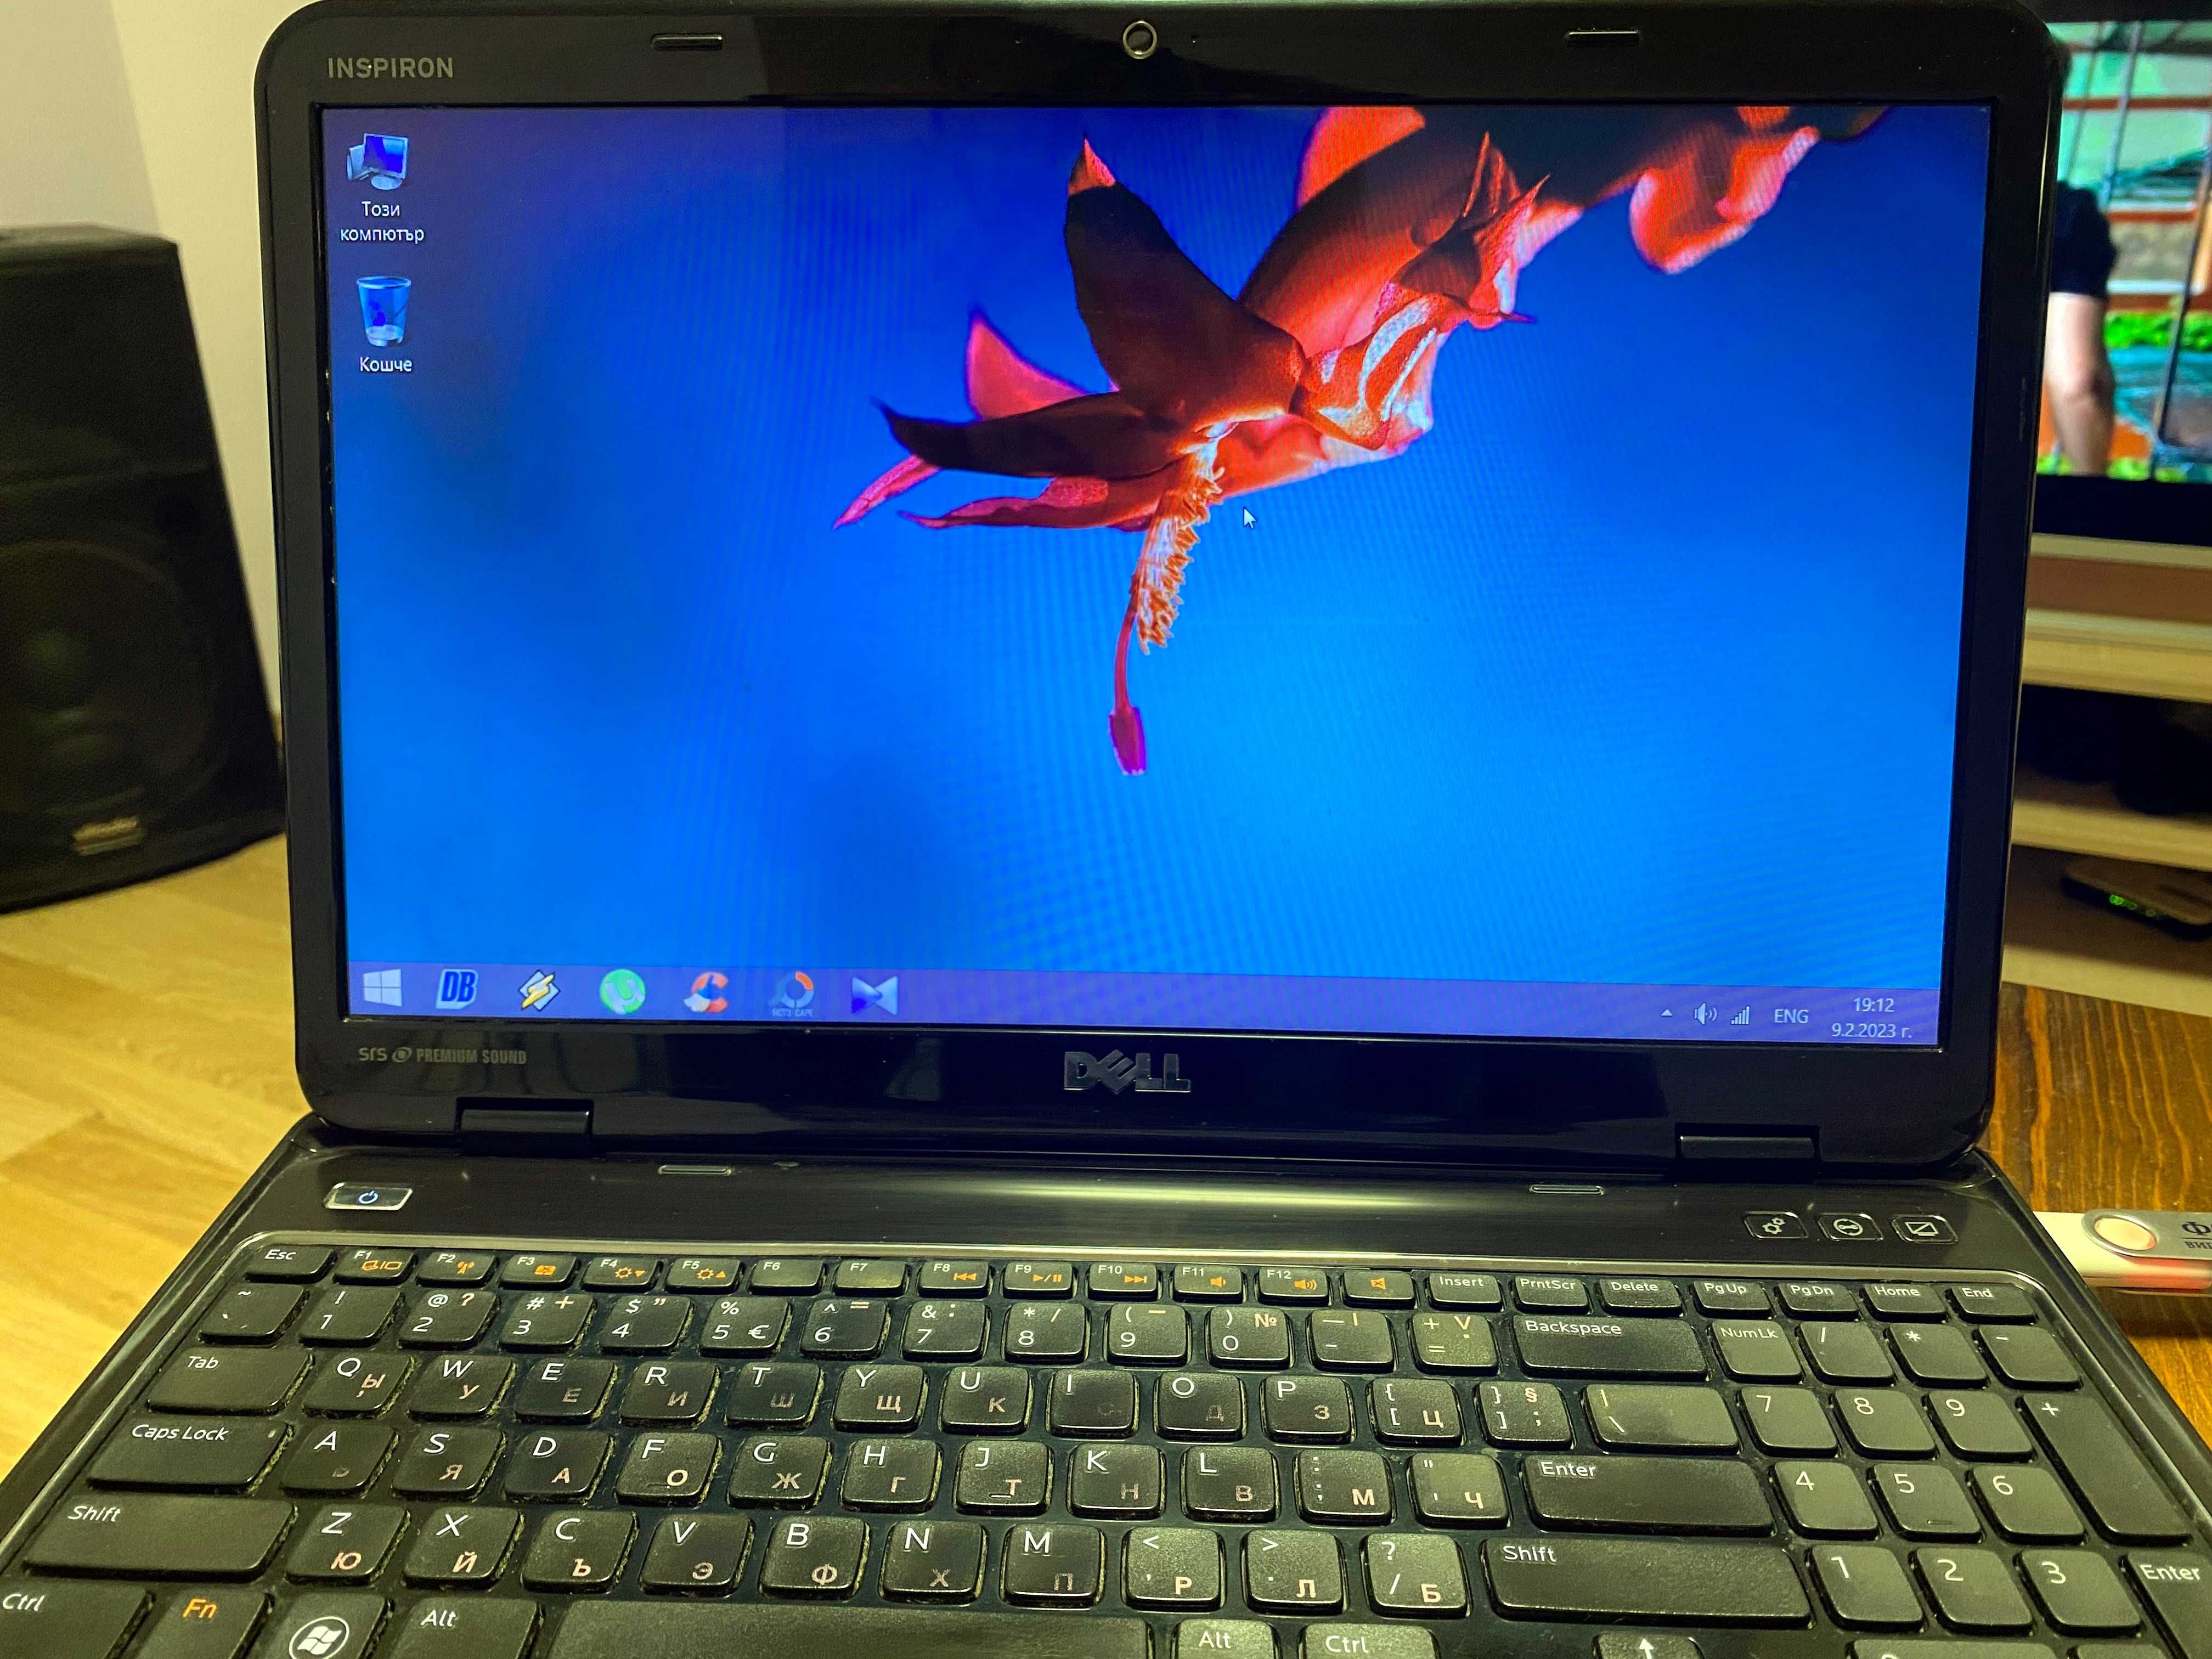 Лаптоп Dell Inspiron N5110